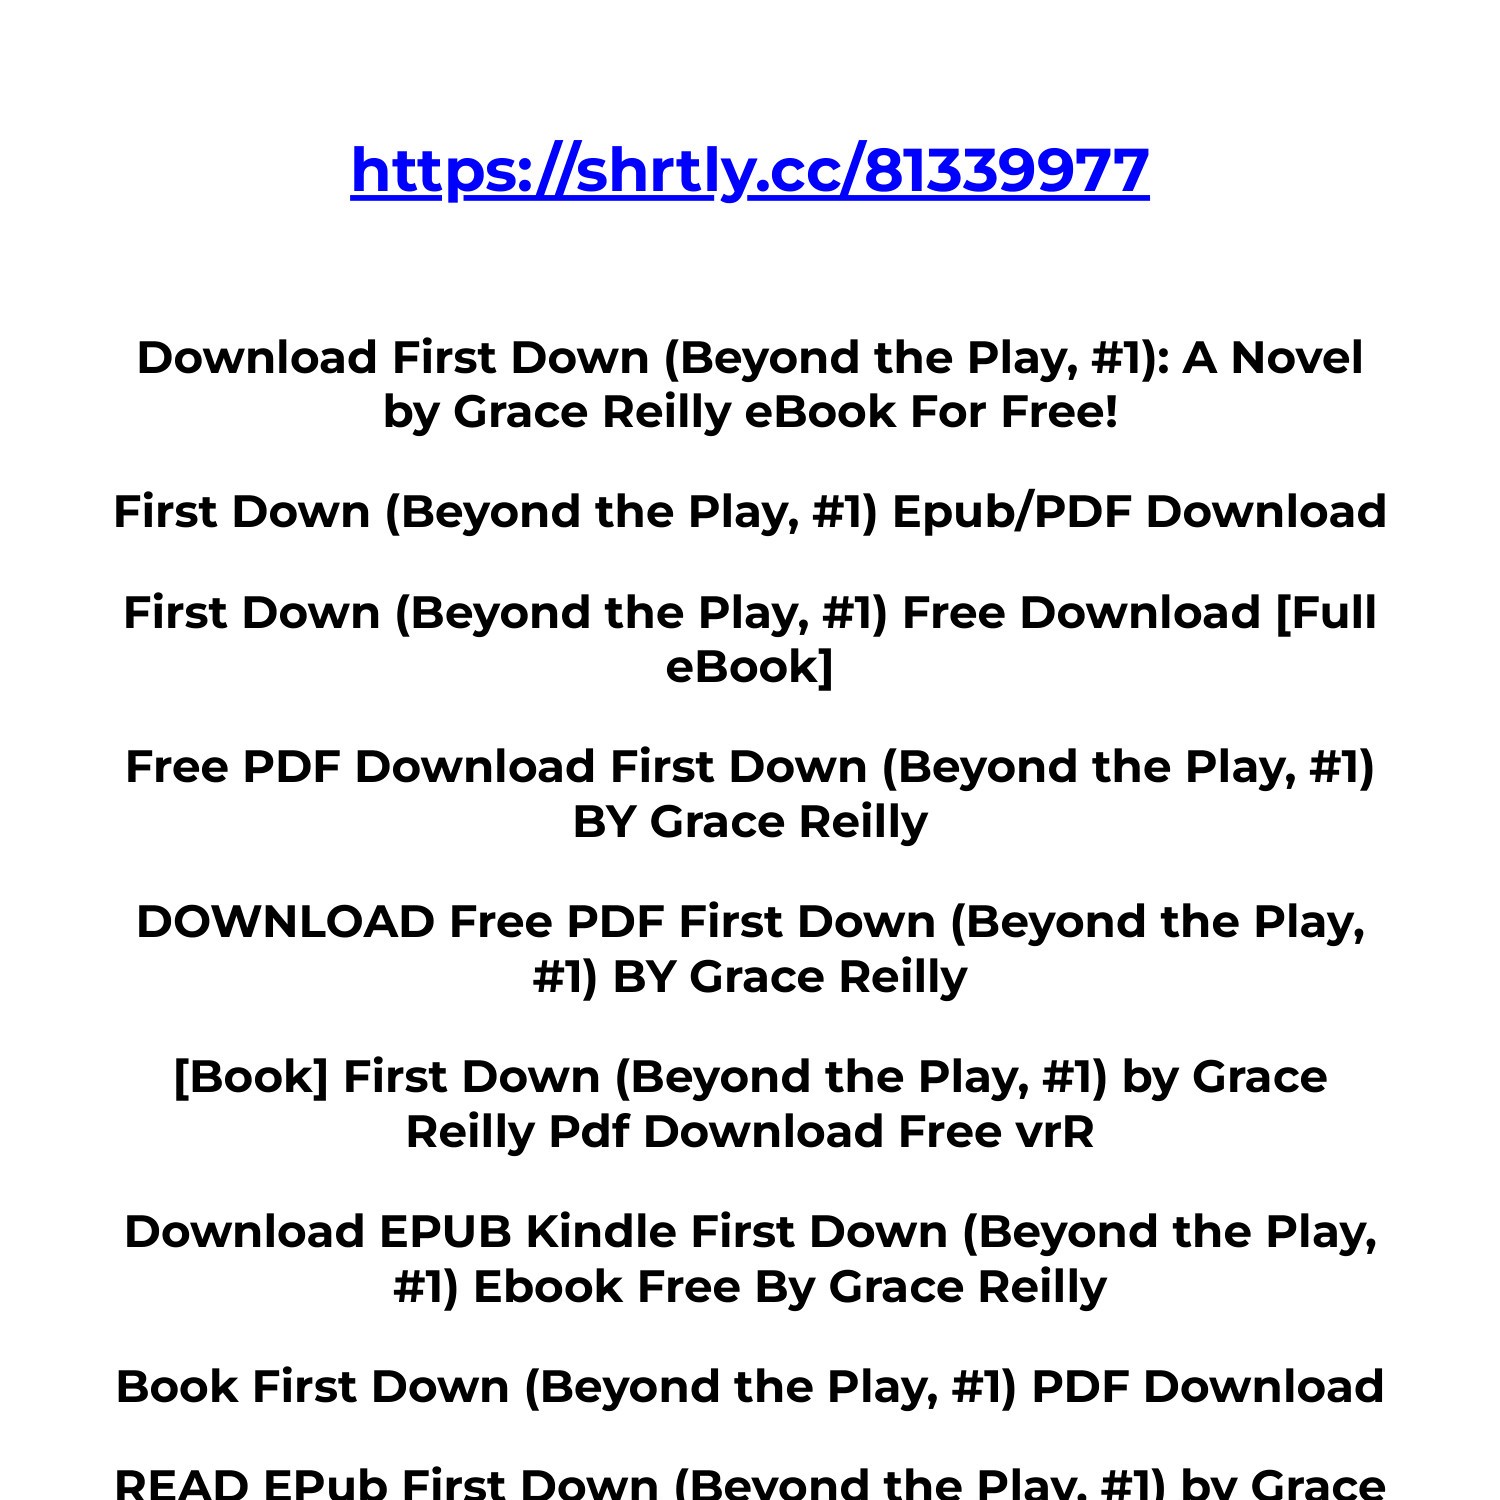 Download First PDF